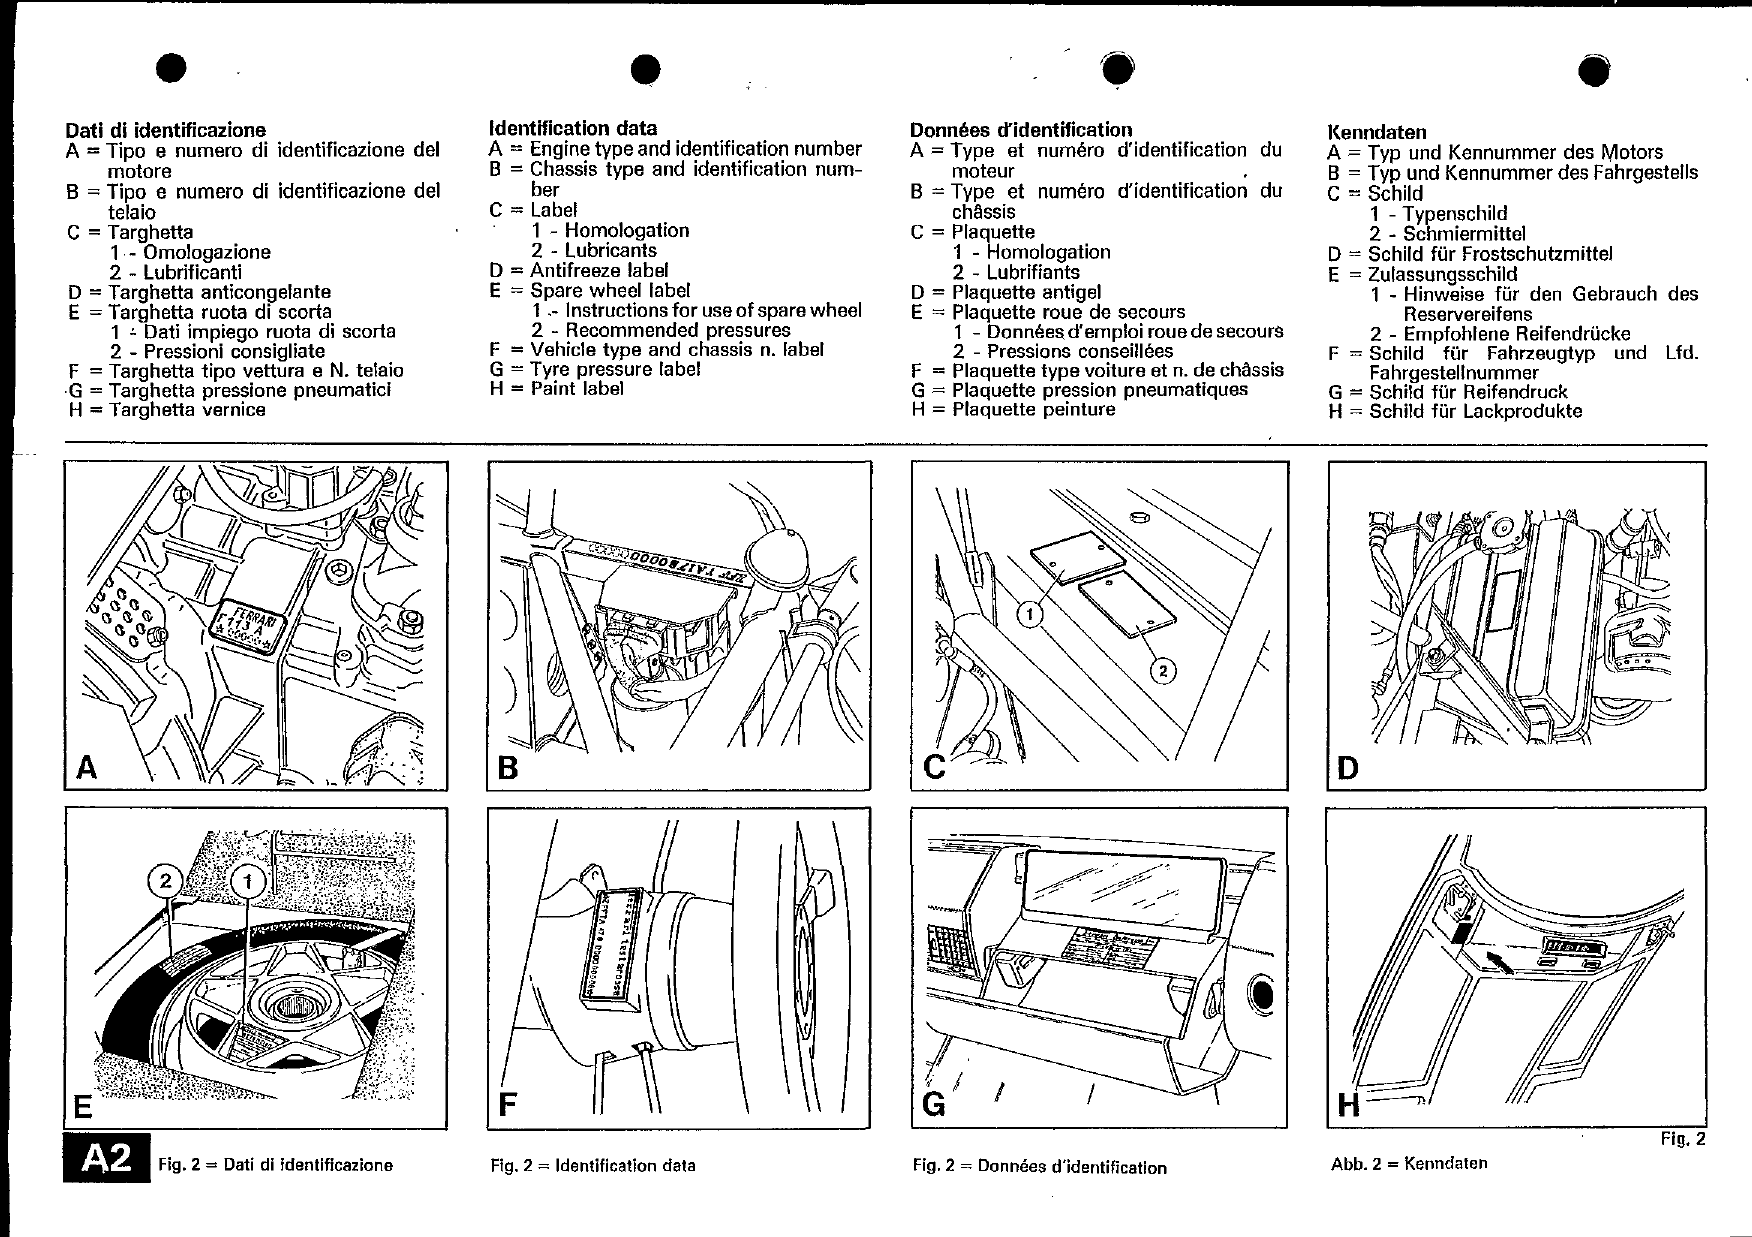 1984-1991 Ferrari Testarossa workshop manual Preview image 5